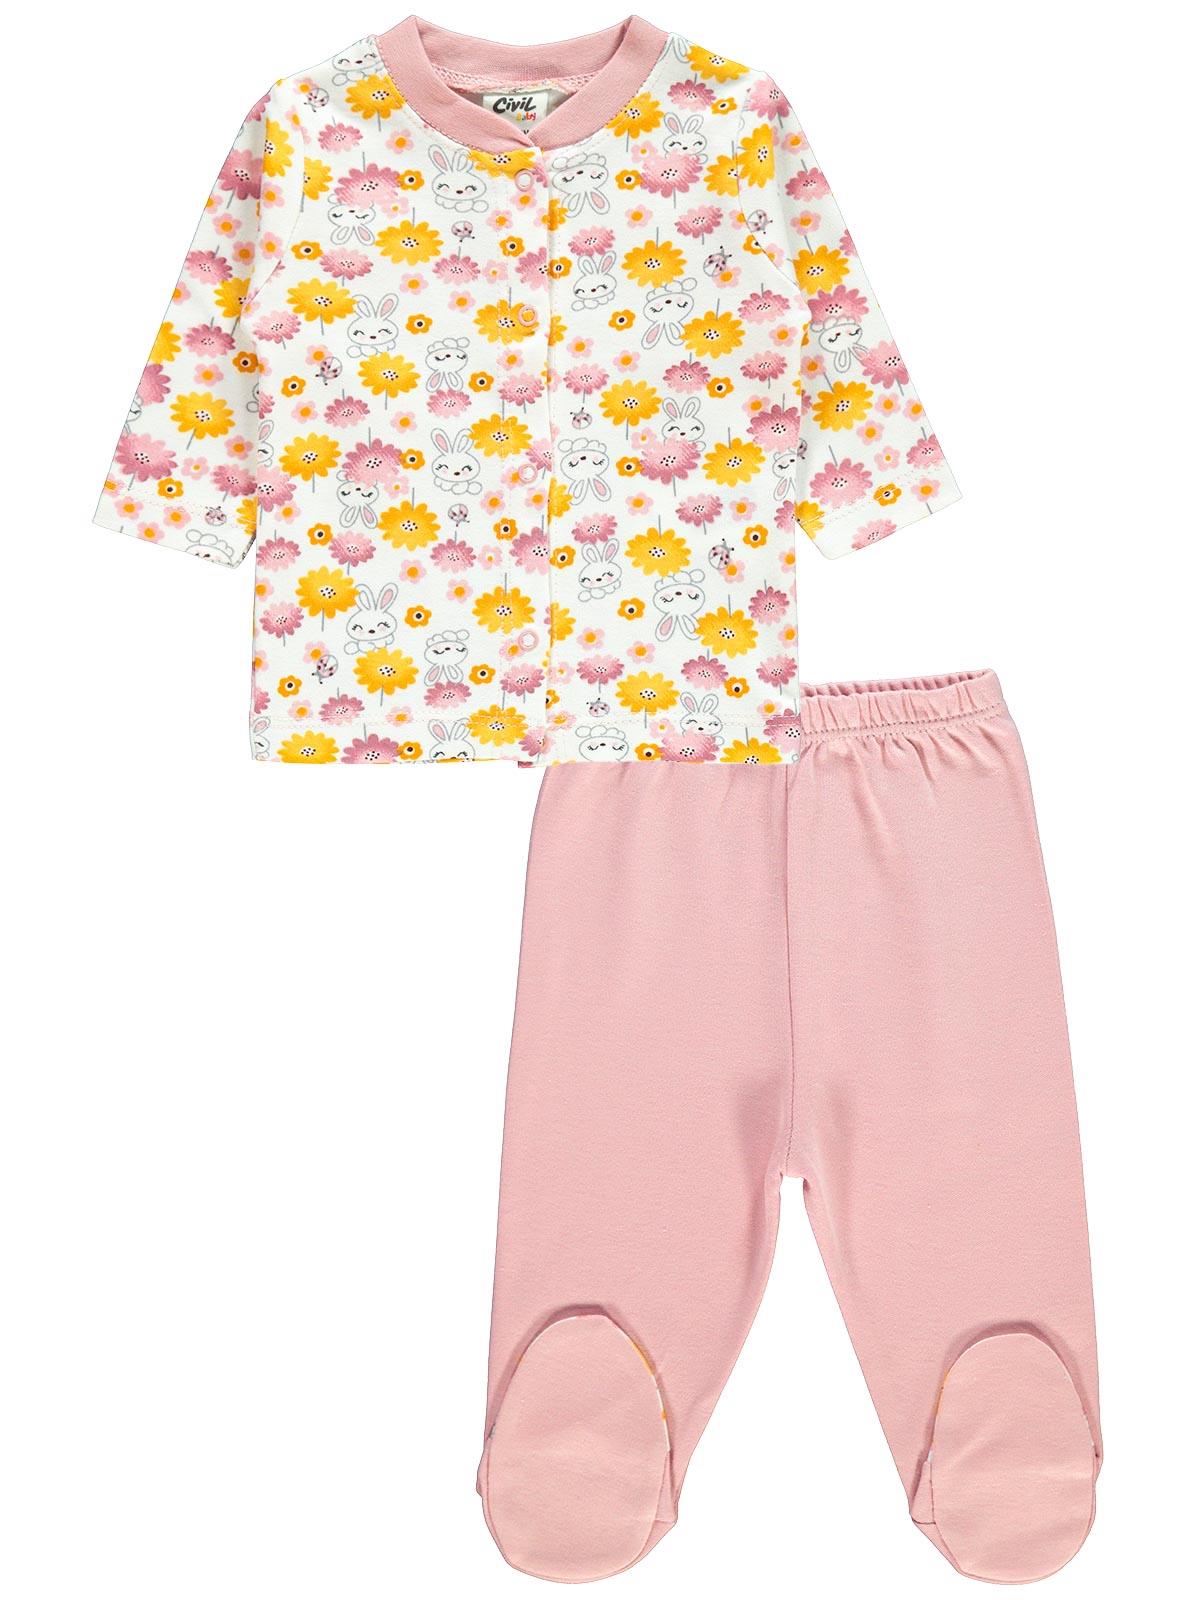 Civil Baby Bebek Pijama Takımı 0-6 Ay Pudra